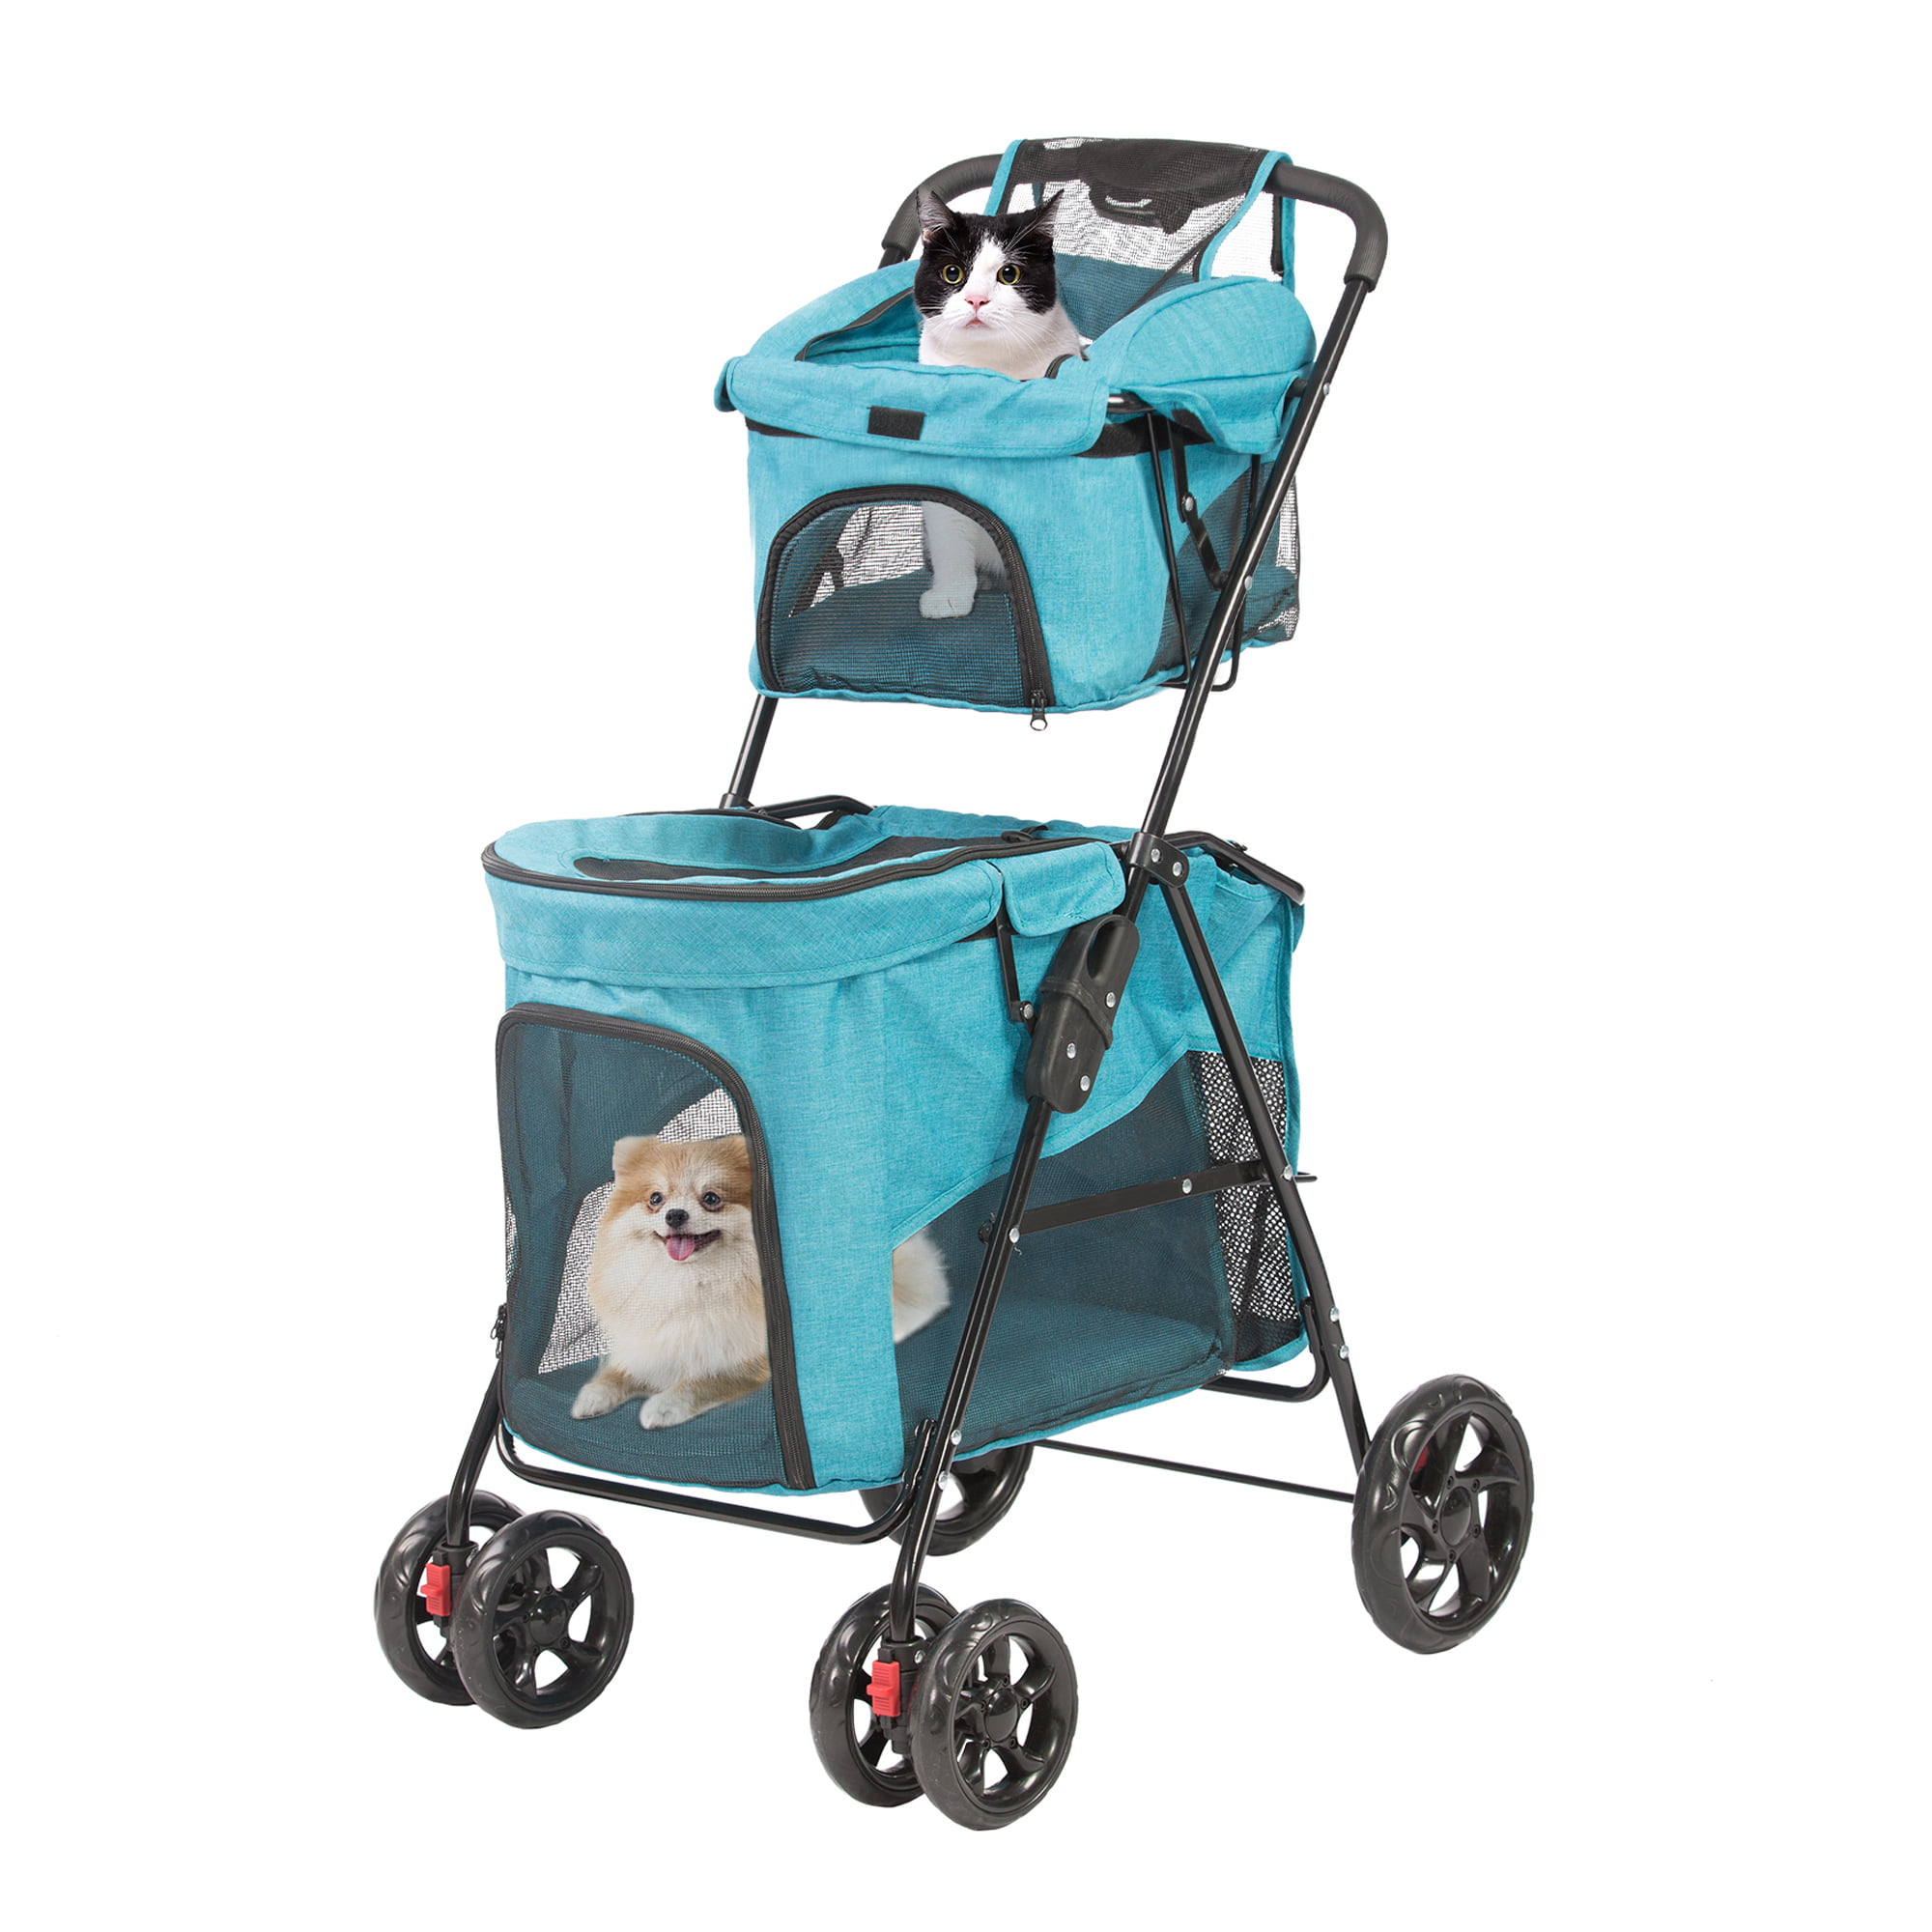 Karmas Product Double Level Dog Stroller Shopping Cart, Blue - Walmart.com